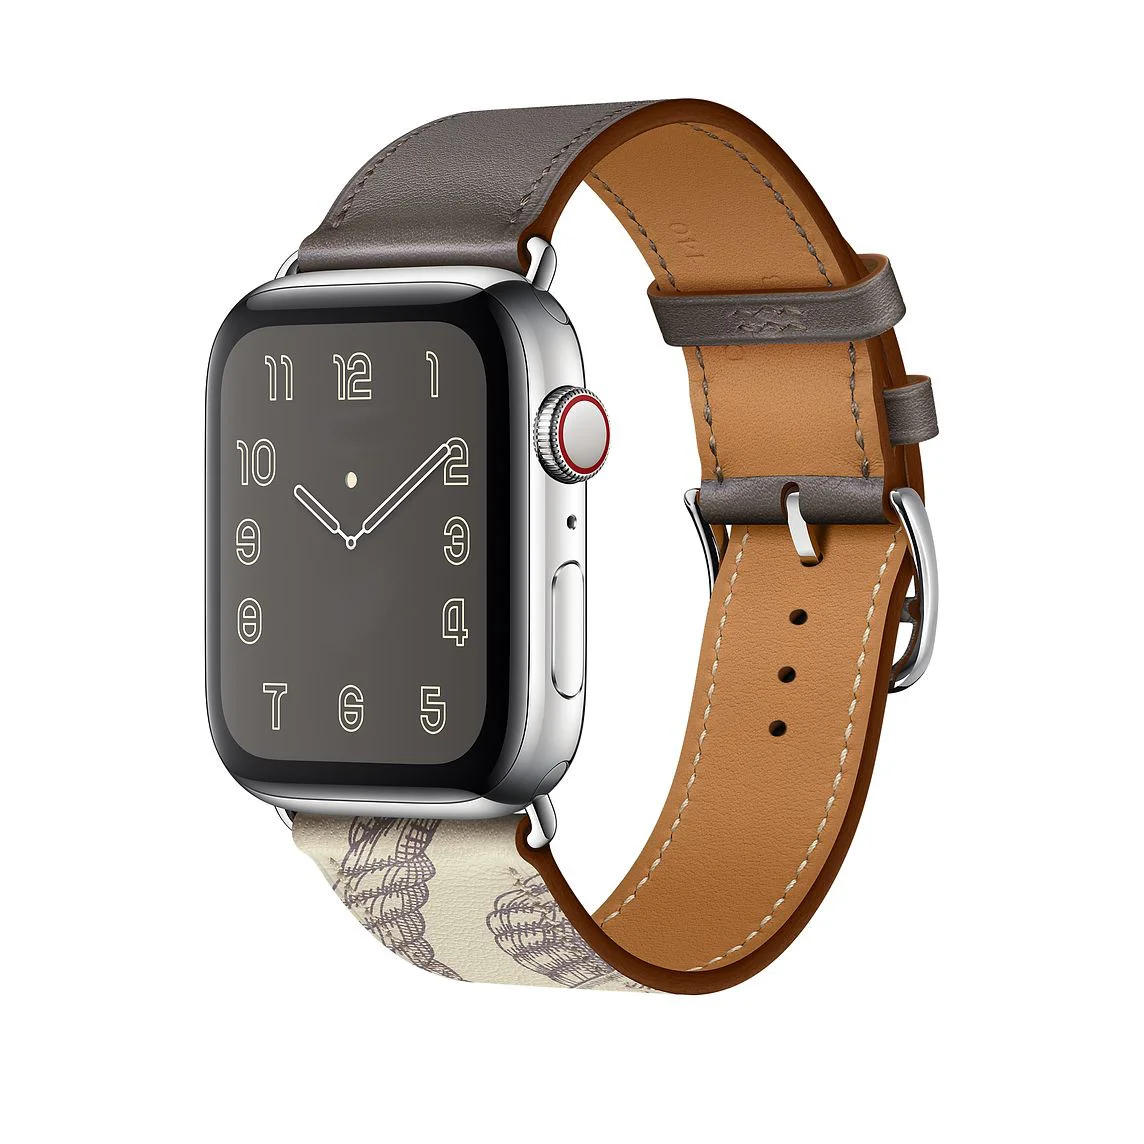 Řemínek iMore Single Tour Apple Watch Series 3/2/1 (42mm) - Cín/Beton